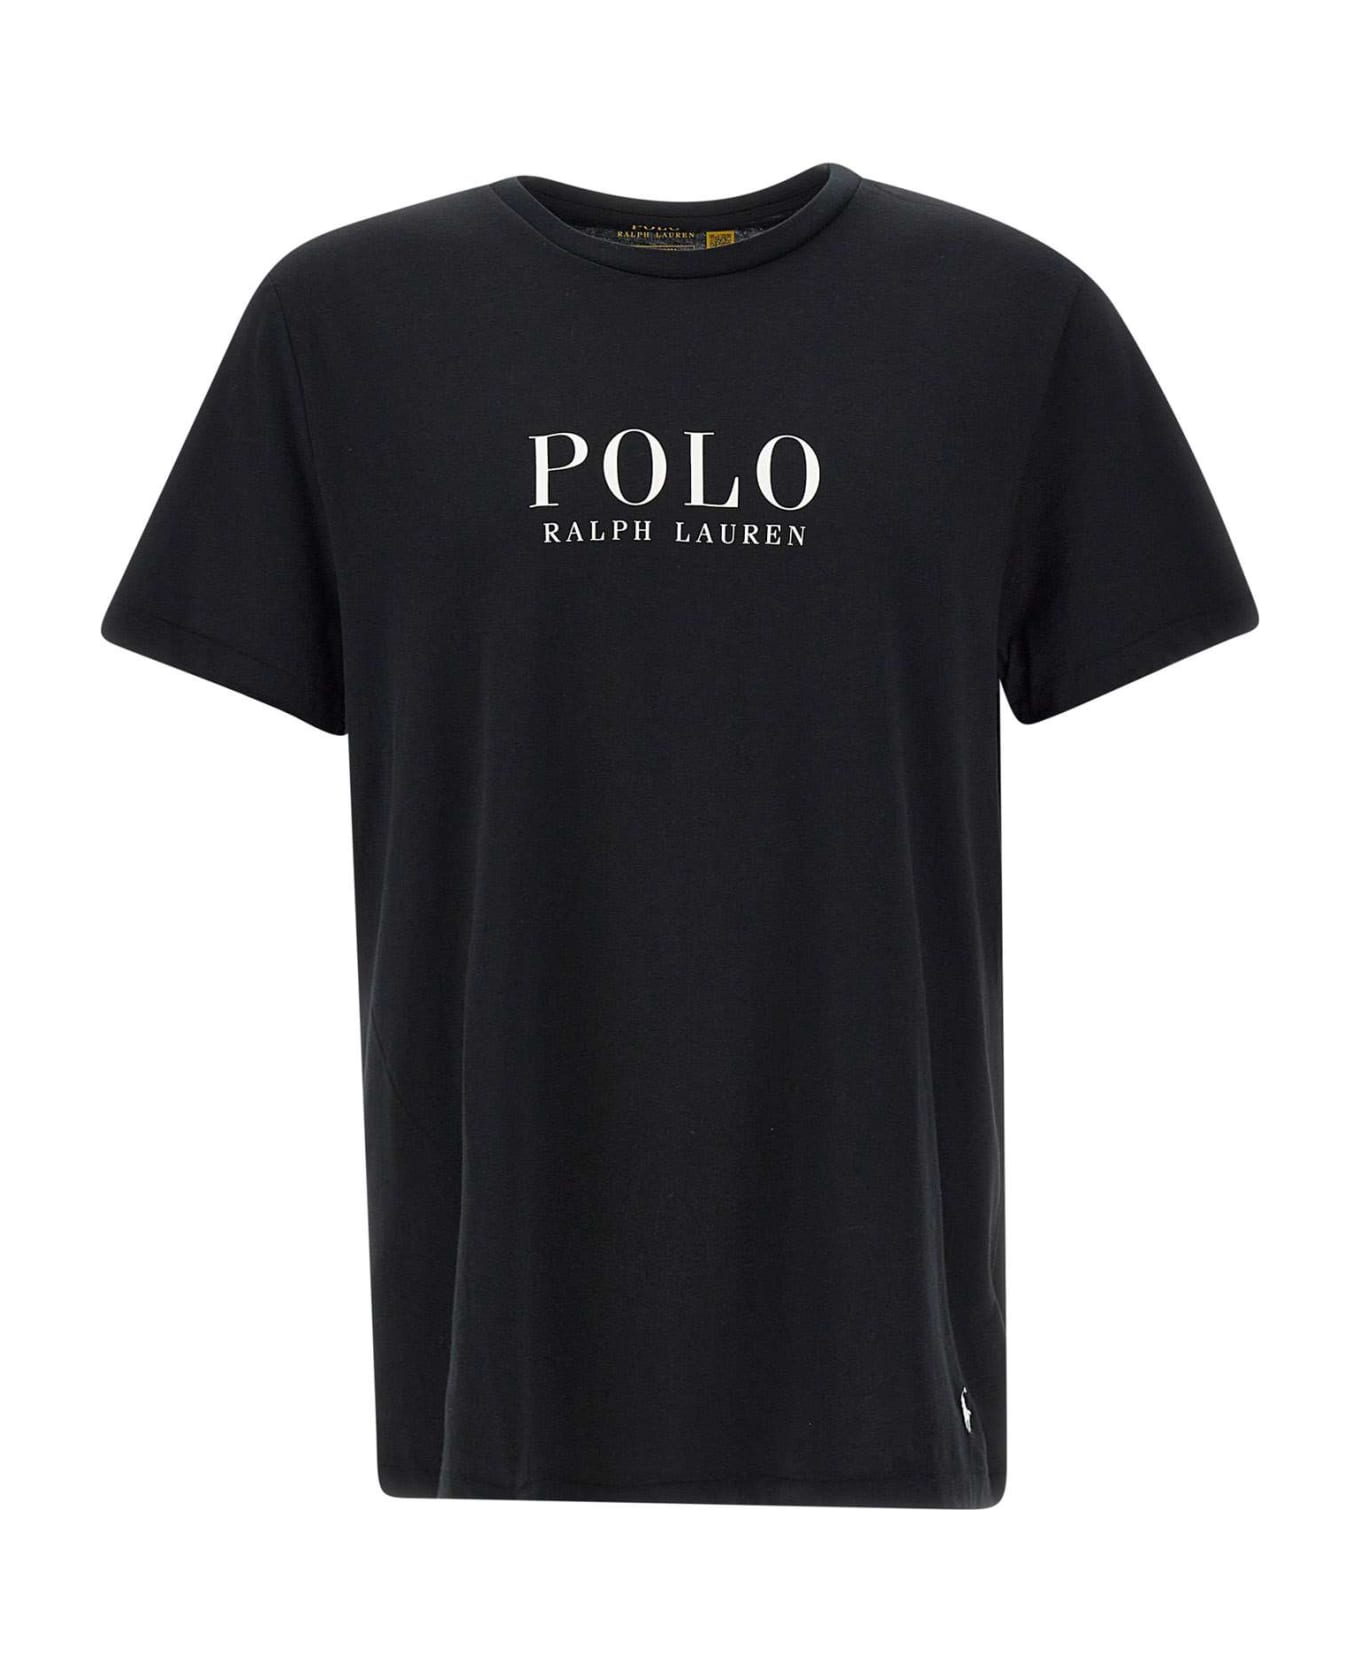 Polo Ralph Lauren 'msw' Cotton T-shirt - Polo black シャツ